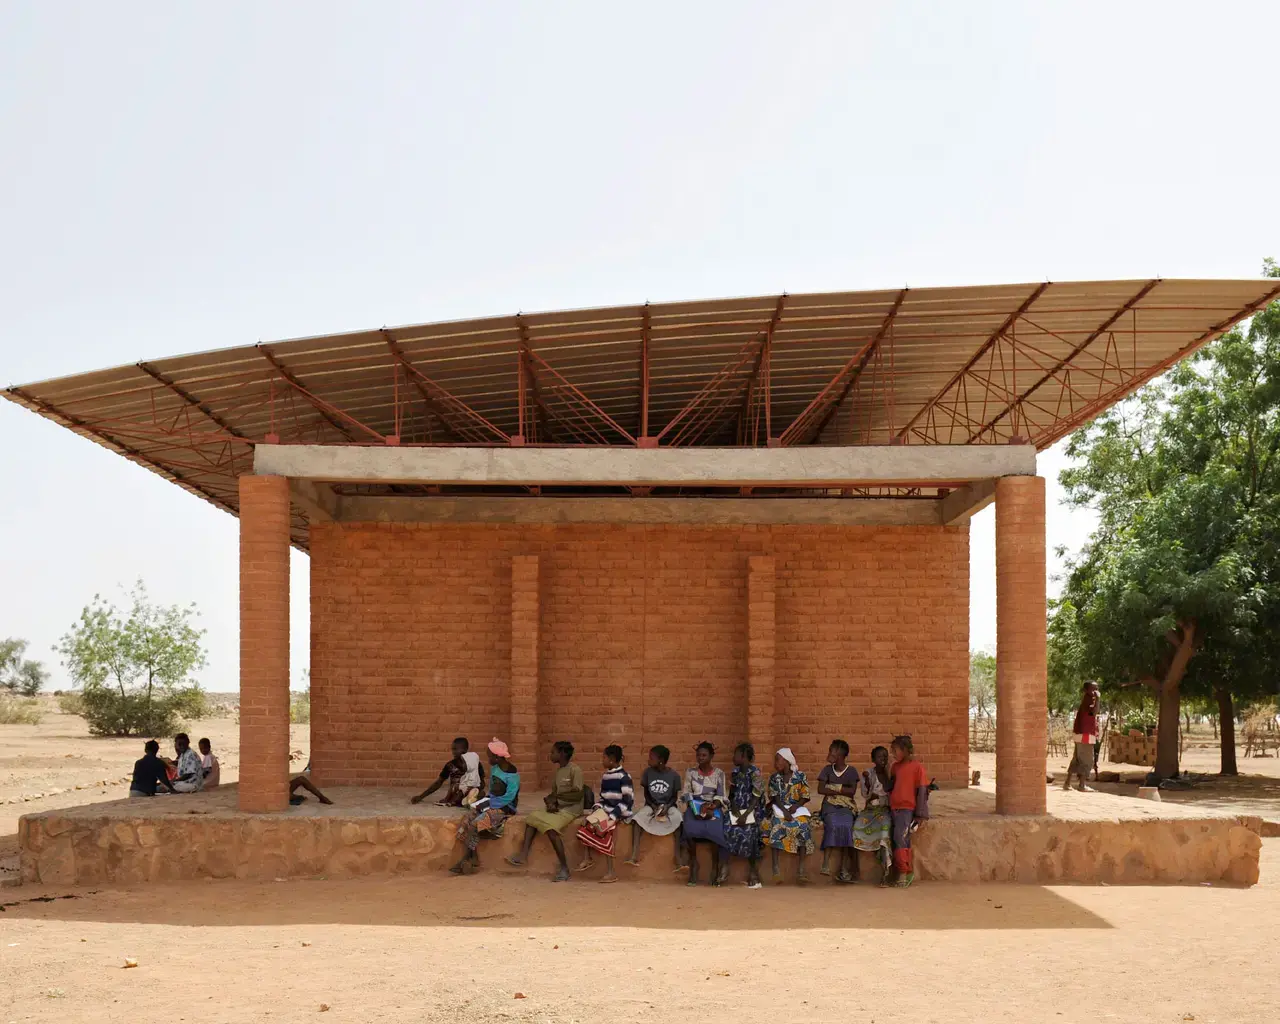 Primary school in Gando, Burkina Faso, completed 2001. Designed by Francis Kéré, Burkinabe, active Berlin. Photograph by Erik-Jan Ouwerkerk.